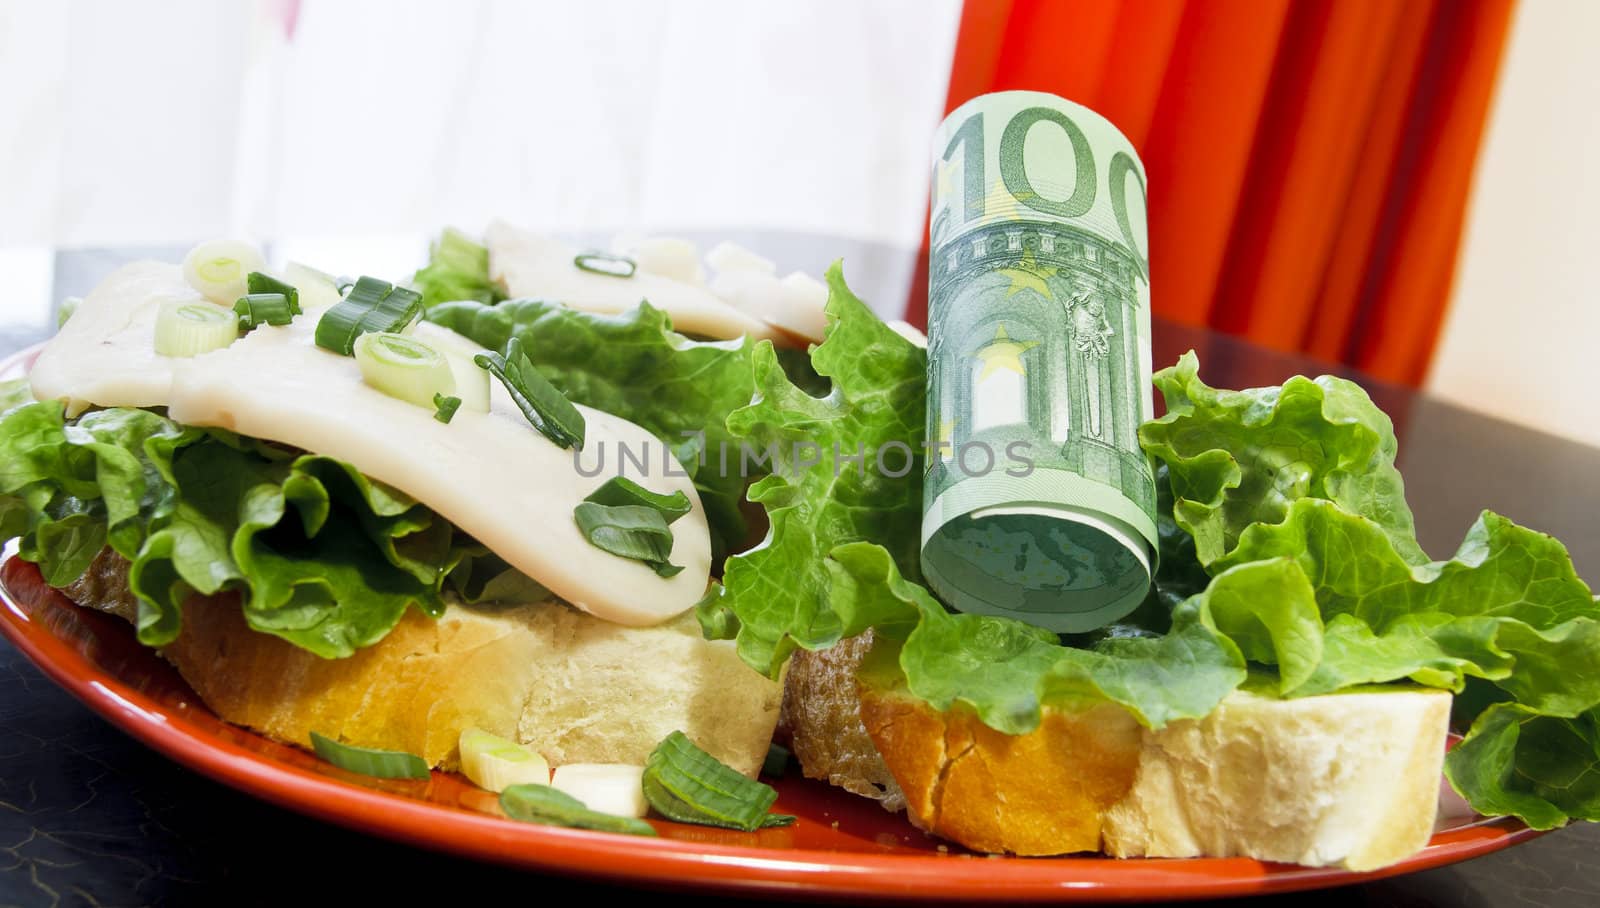 Eating money like bread at breakfast by manaemedia